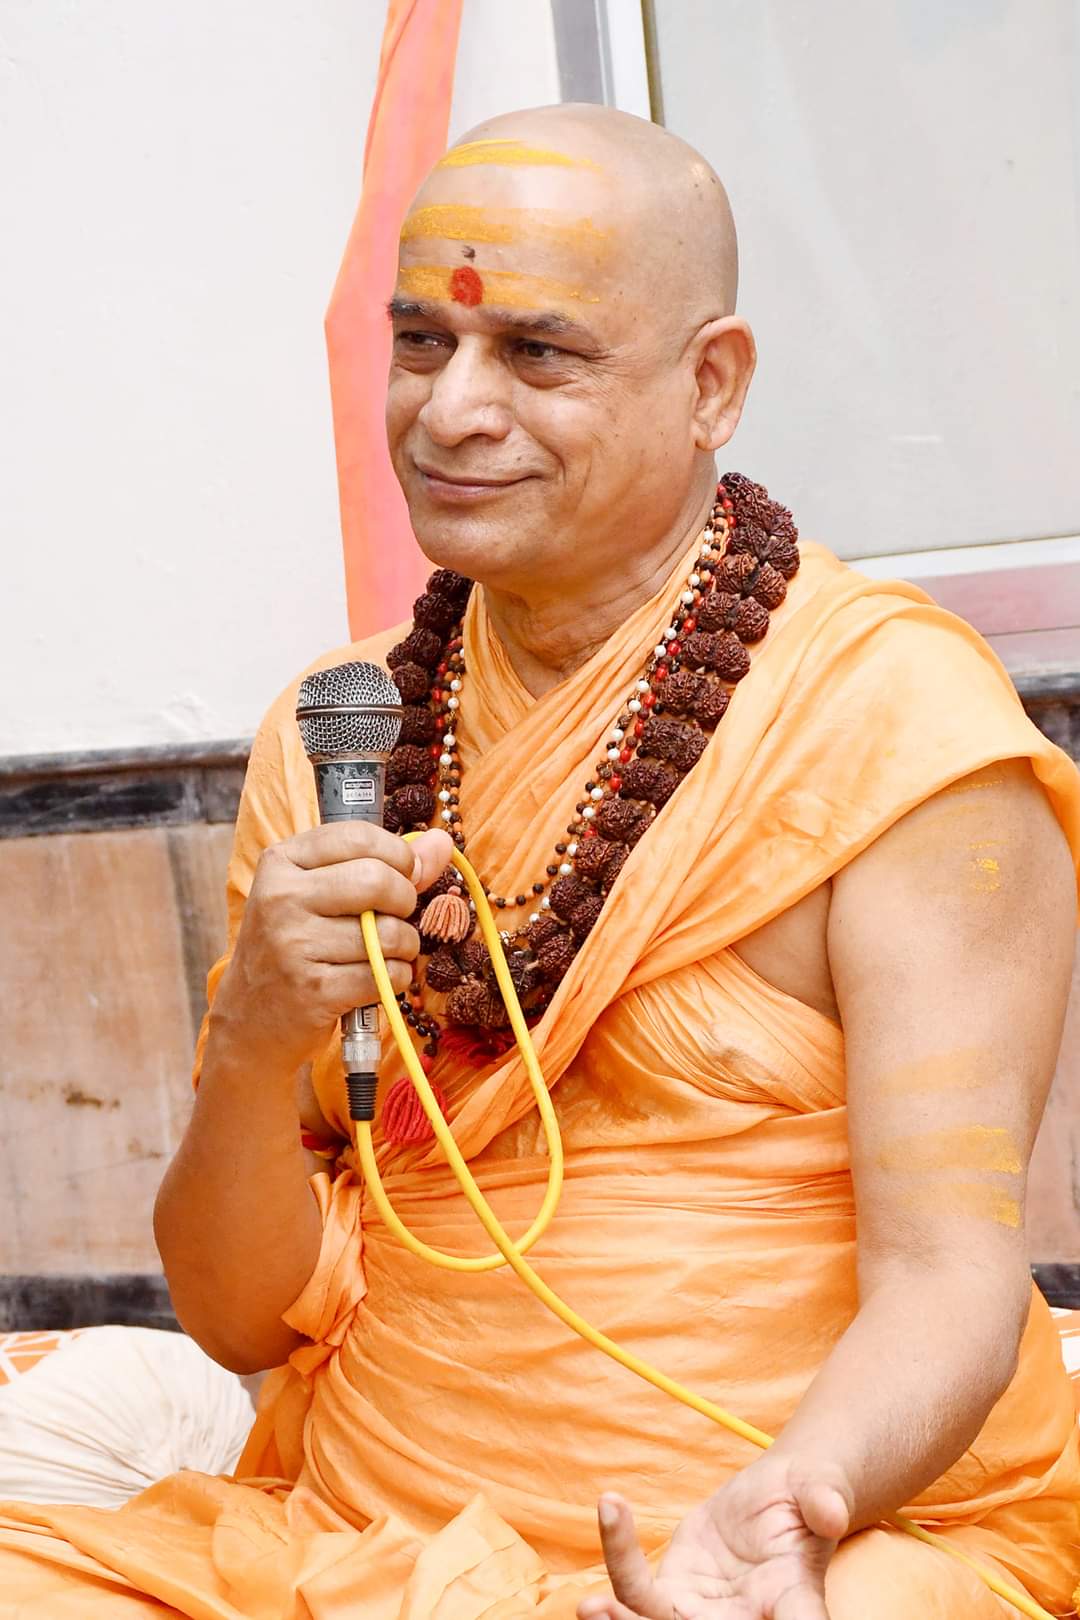 Swami Sadanand Saraswati Maharaj